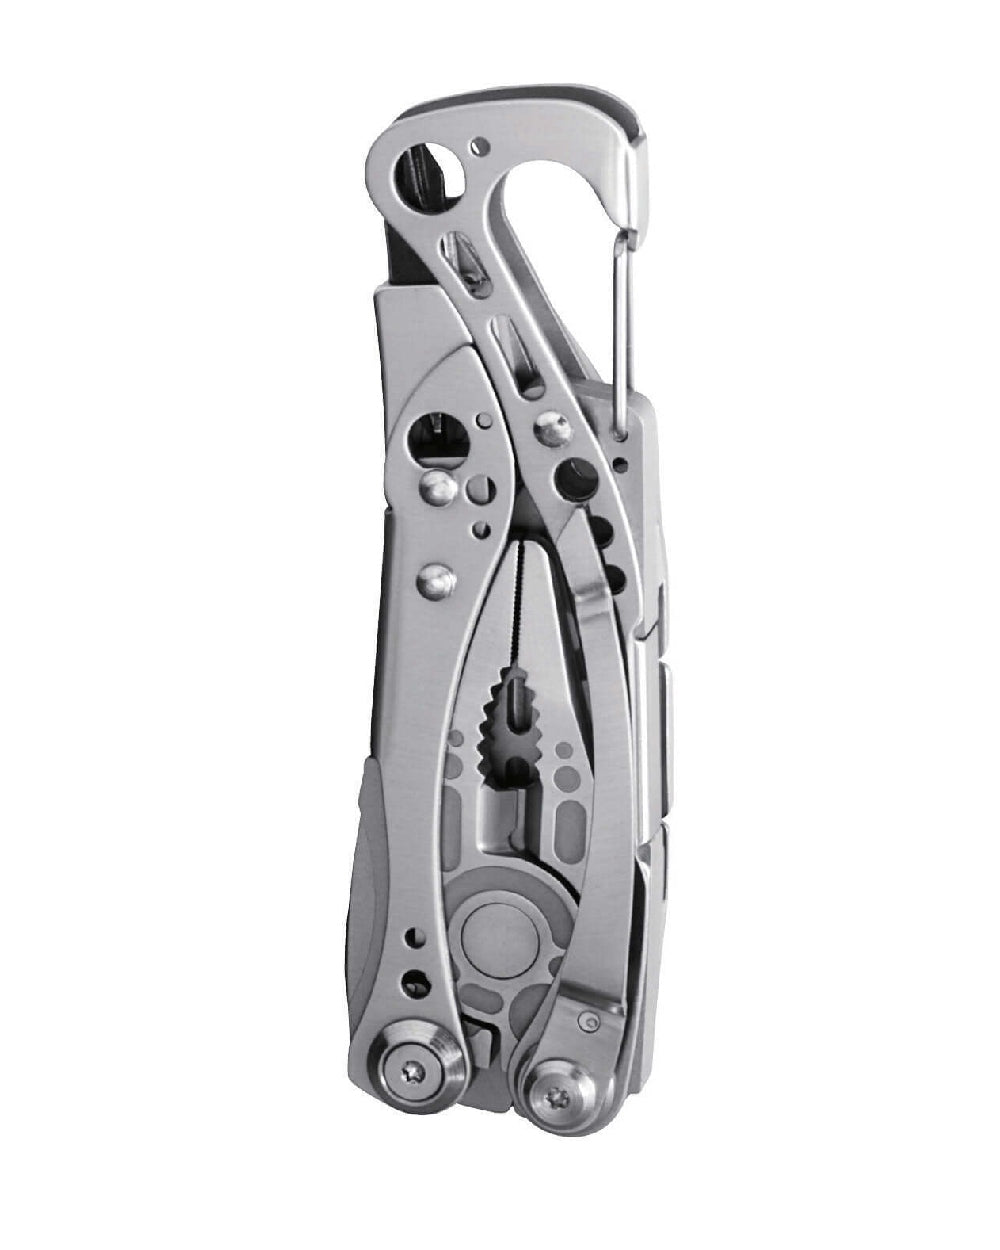 Leatherman Skeletool Pocket Multi-Tool in Stainless Steel 